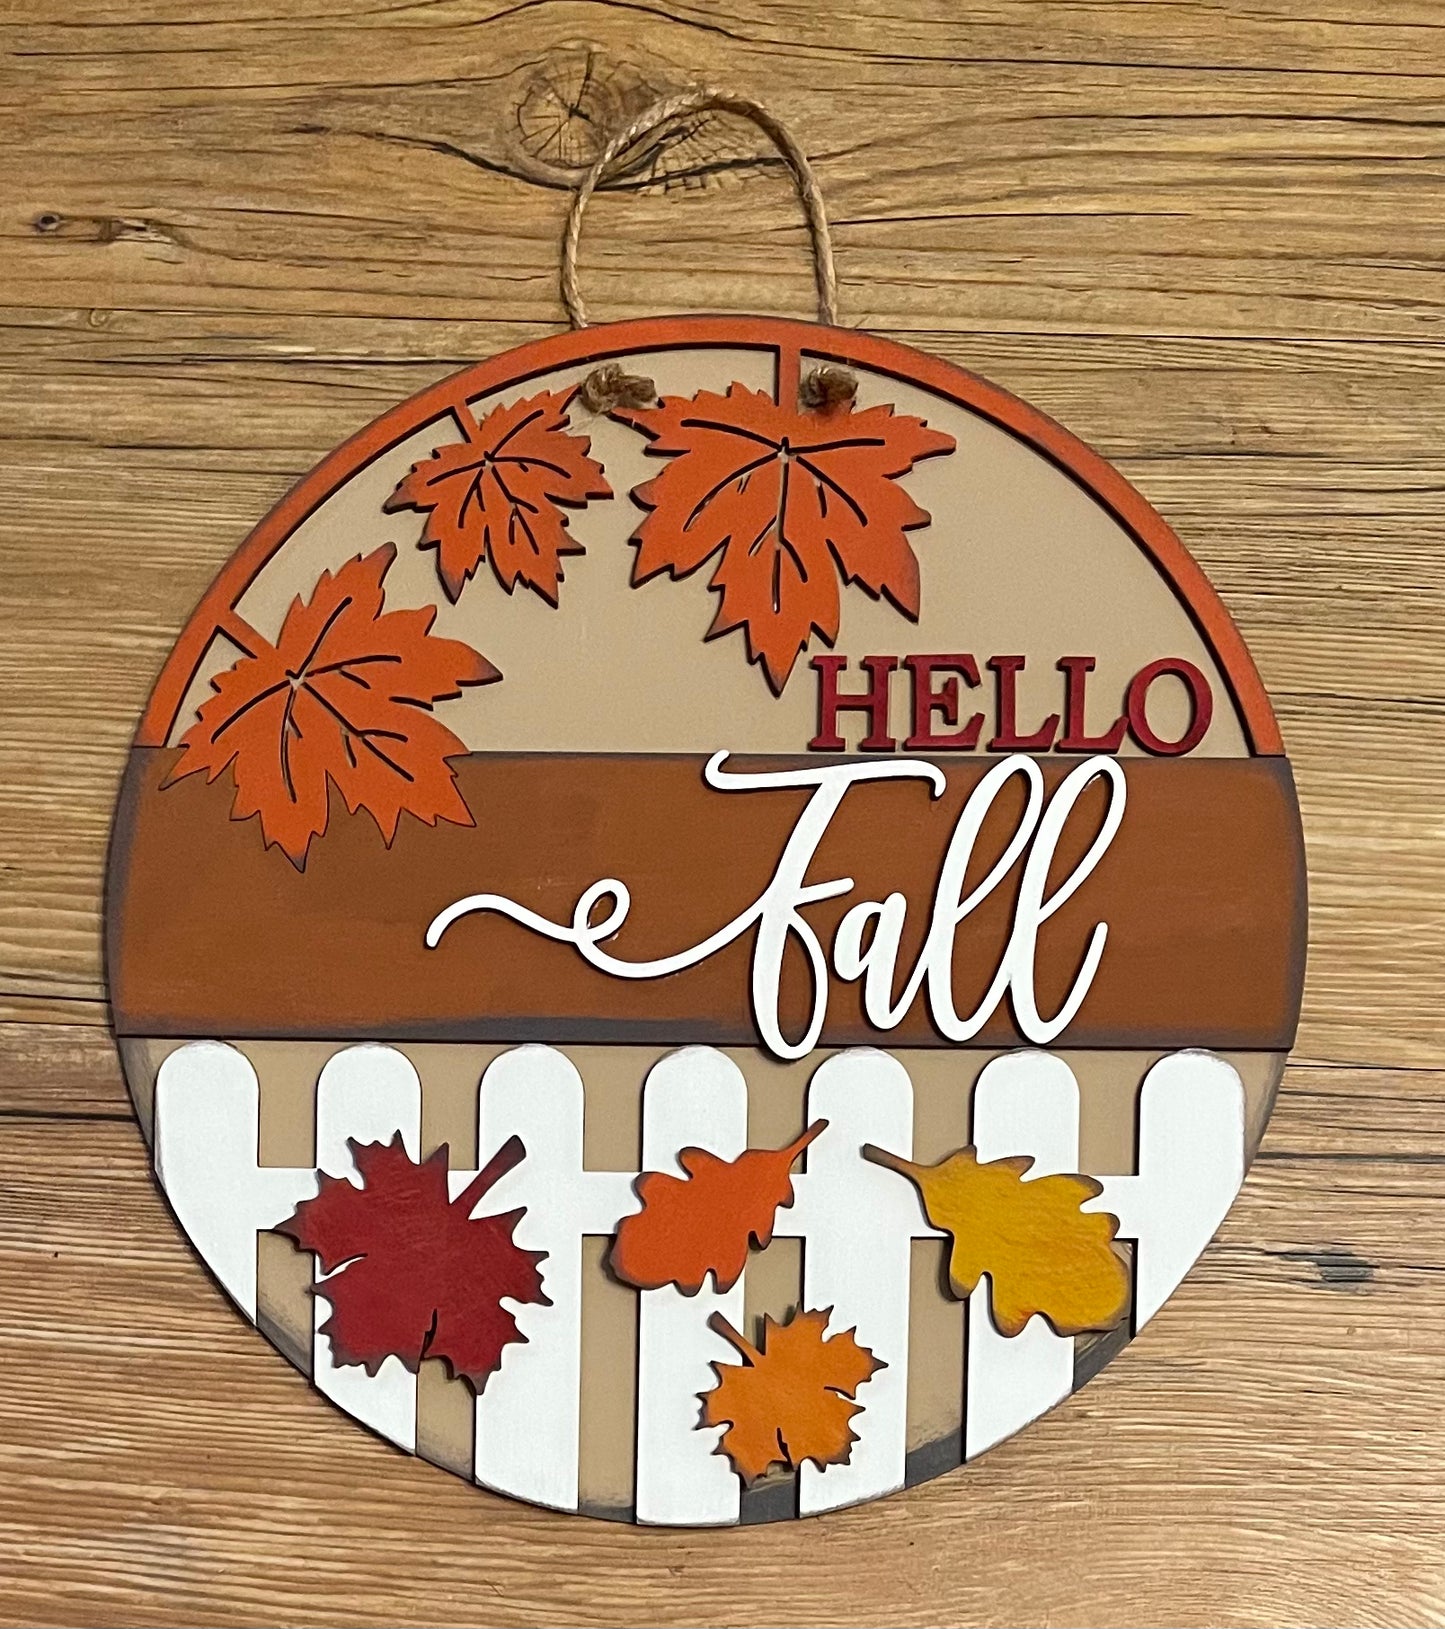 Hello Fall Leaves Door Sign Kit, DIY Kit - unpainted wood cutouts